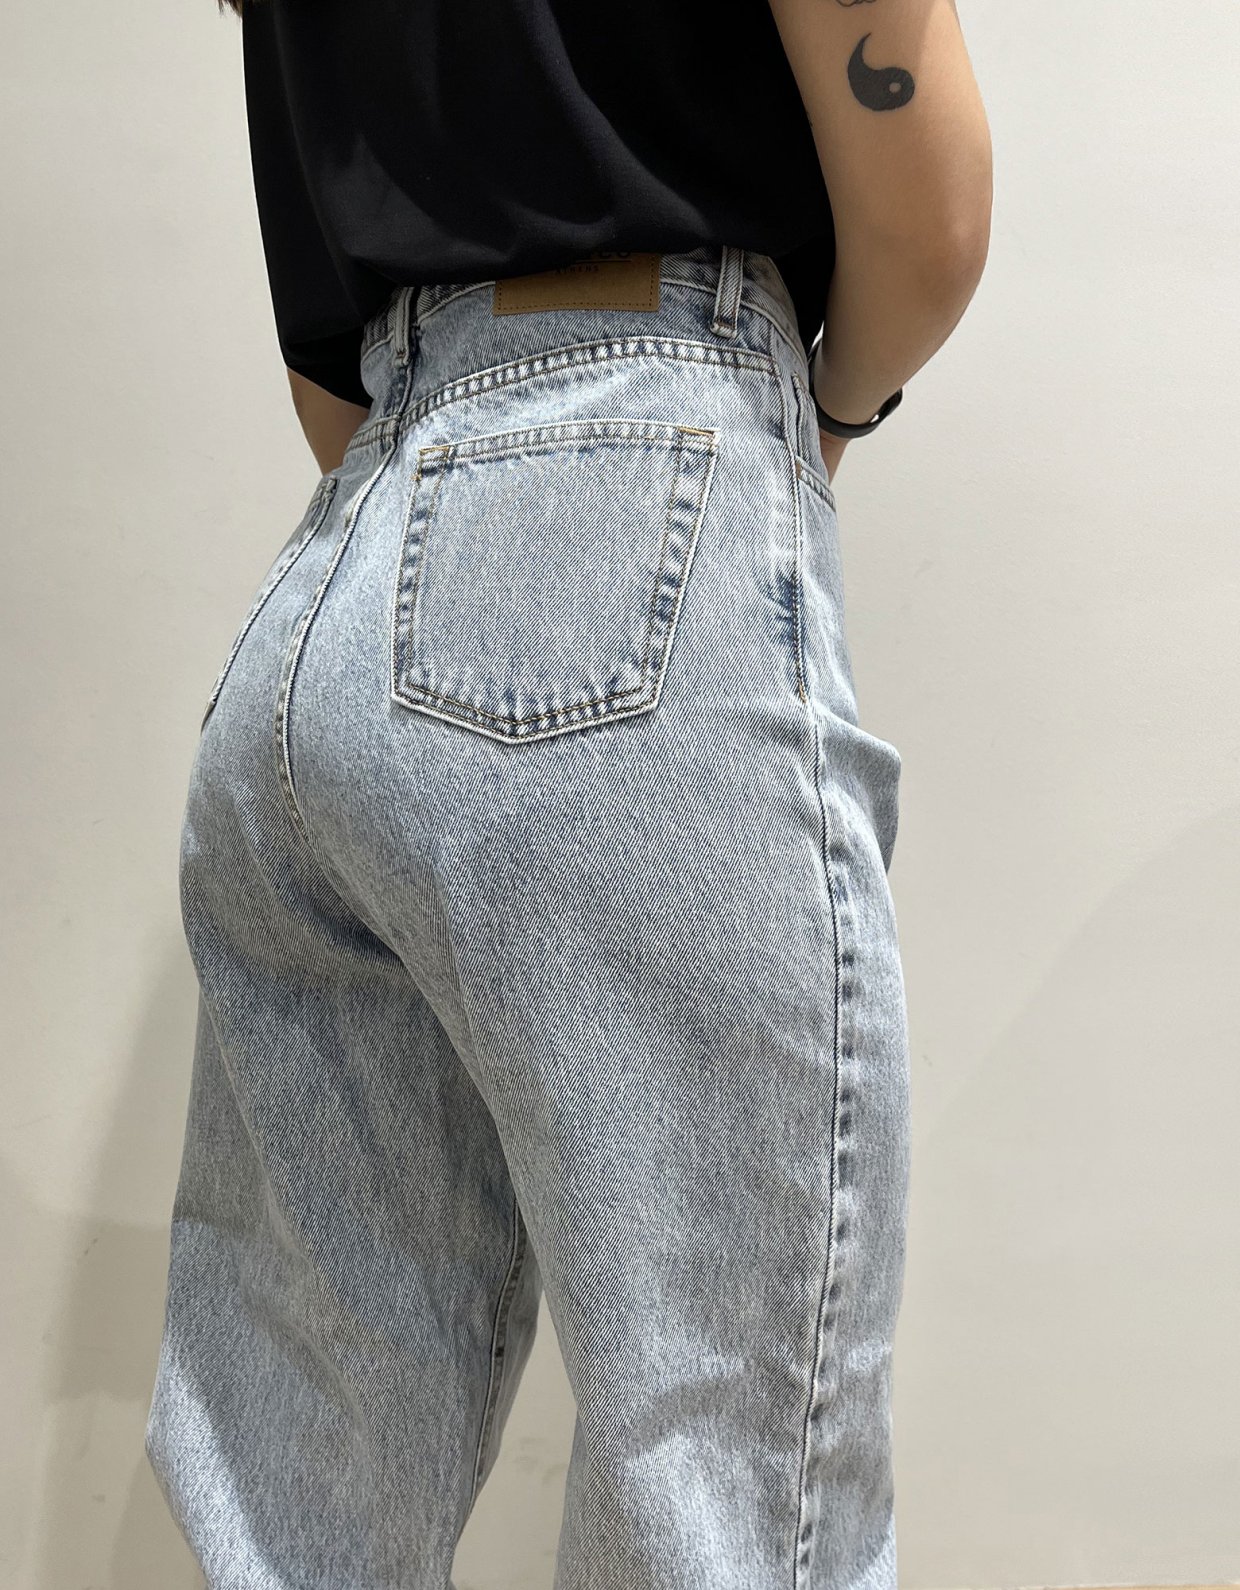 Sac & CO Jeans Lima slouchy light blue denim pants